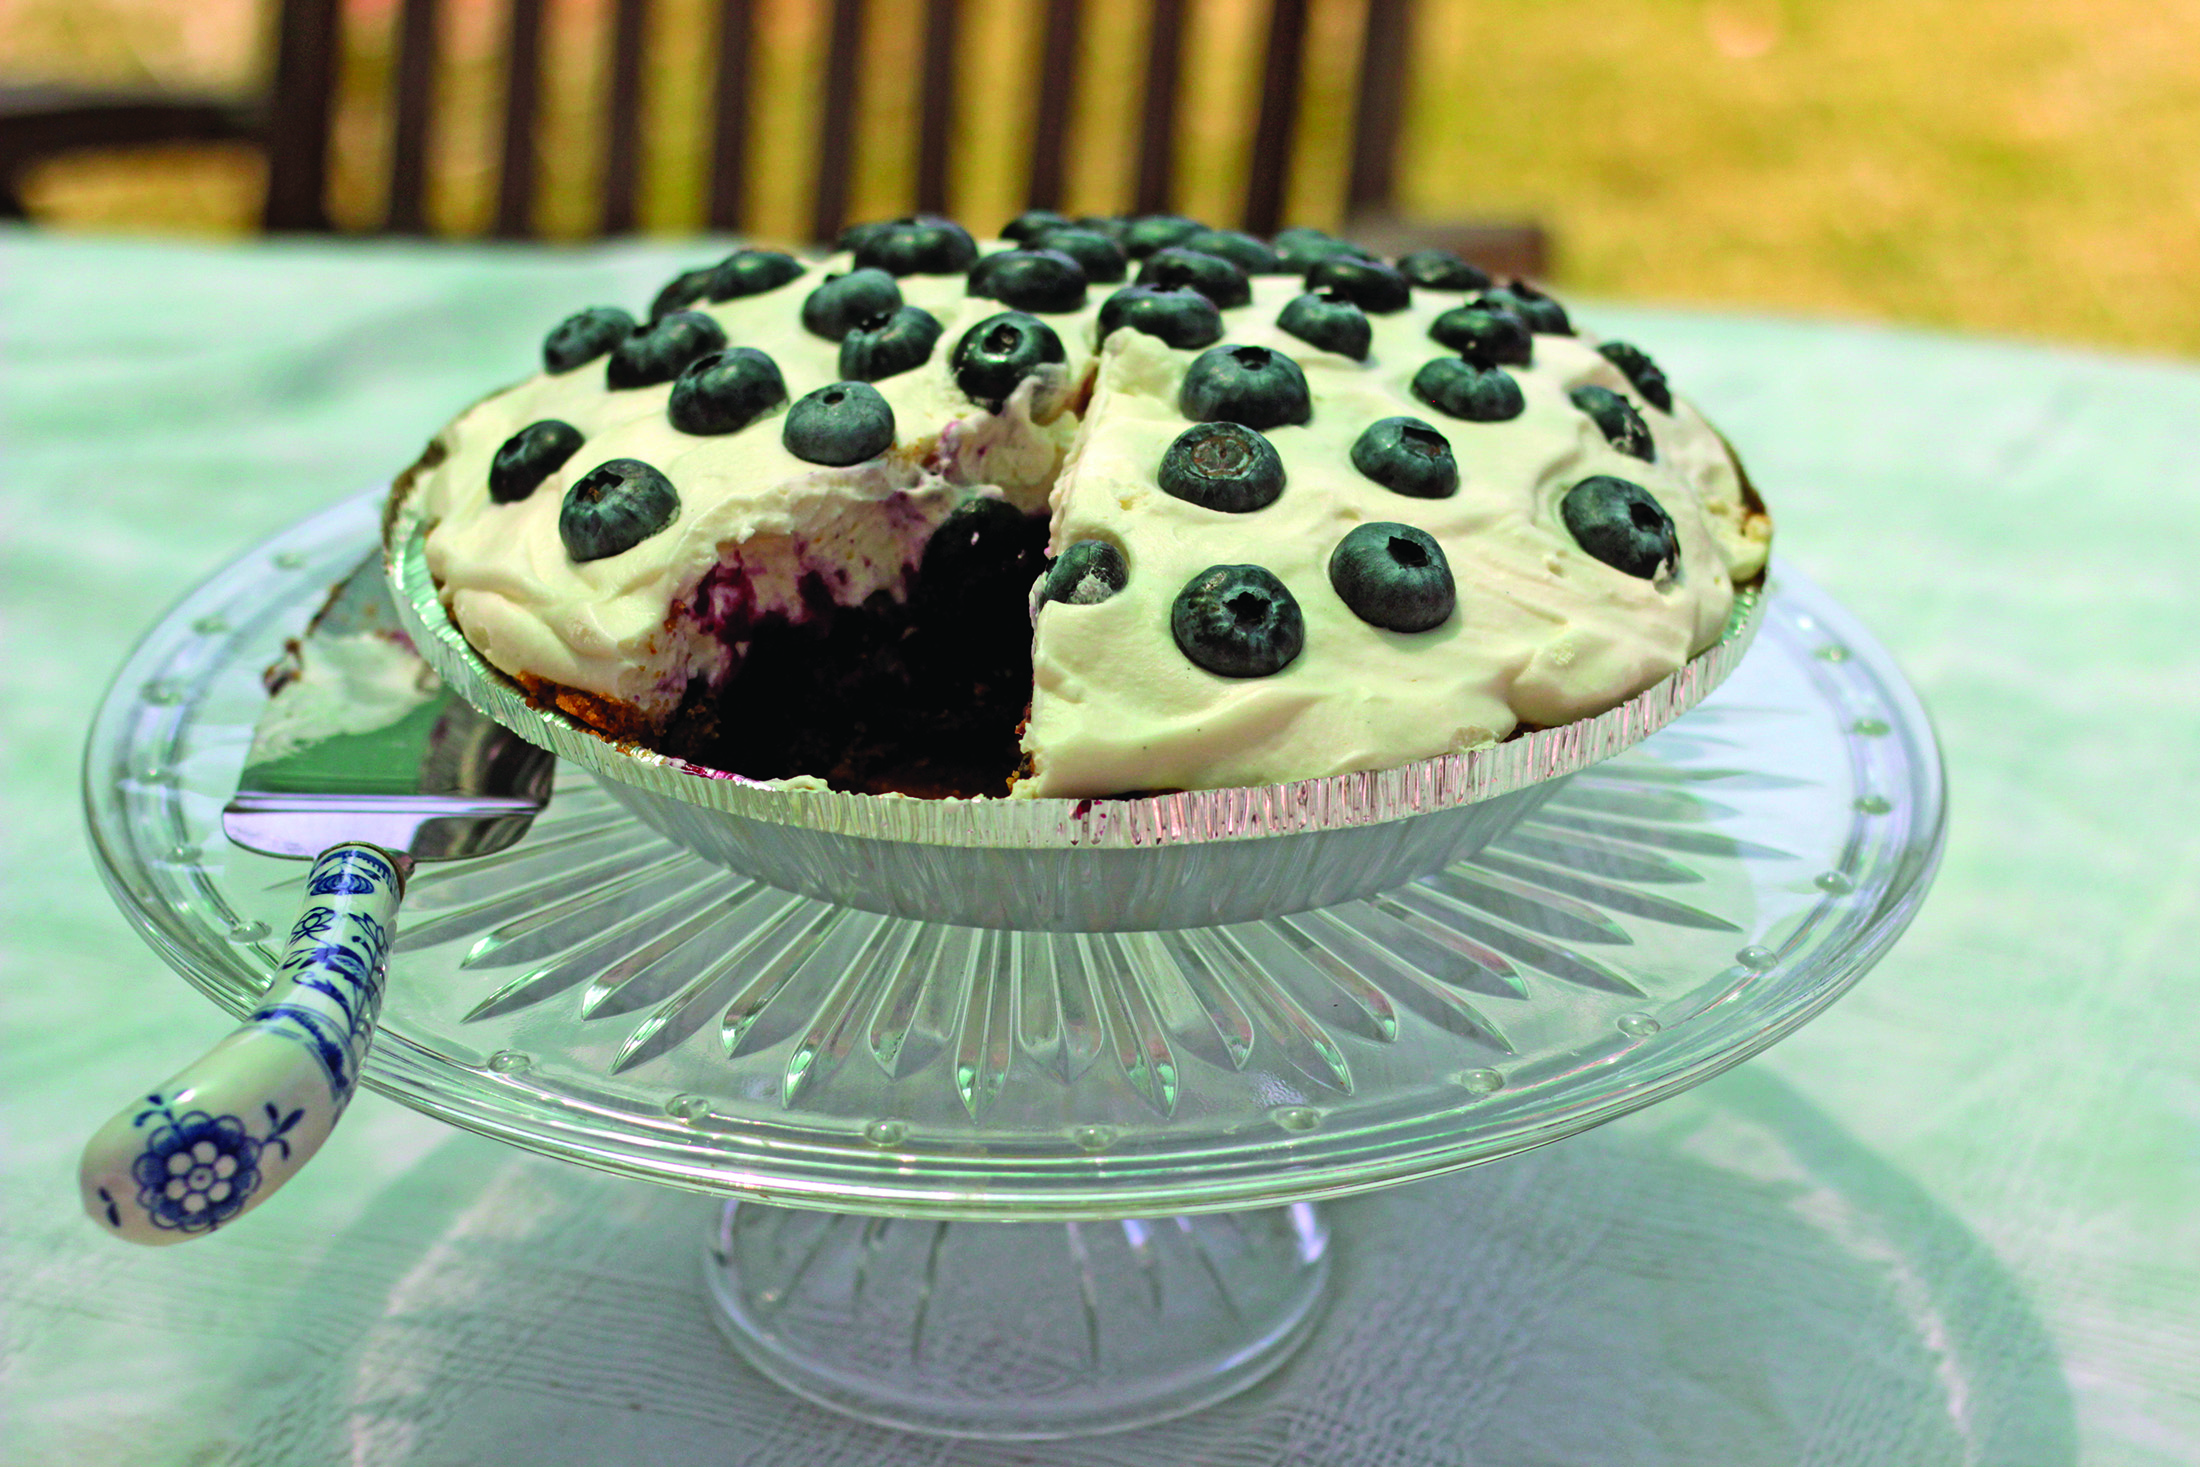 Freshie’s Blueberry Pie is always a hit